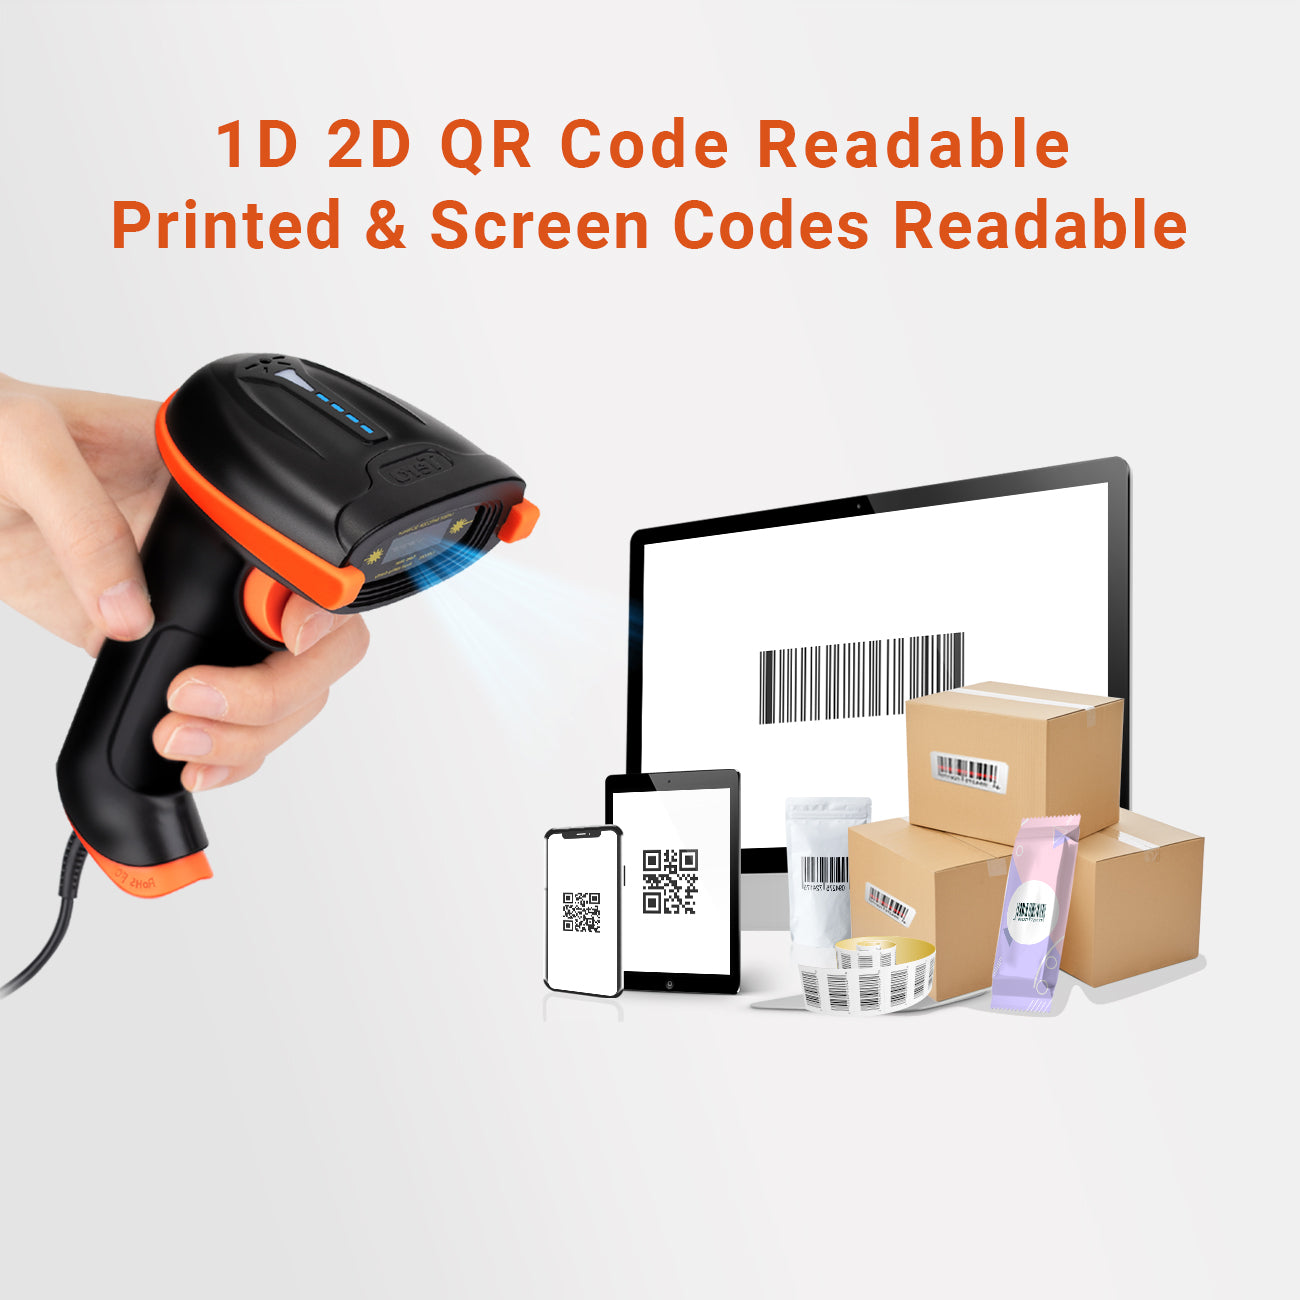 tera-d5100y-2d-usb-barcode-scanner-reads-1d-2d-qr-codes